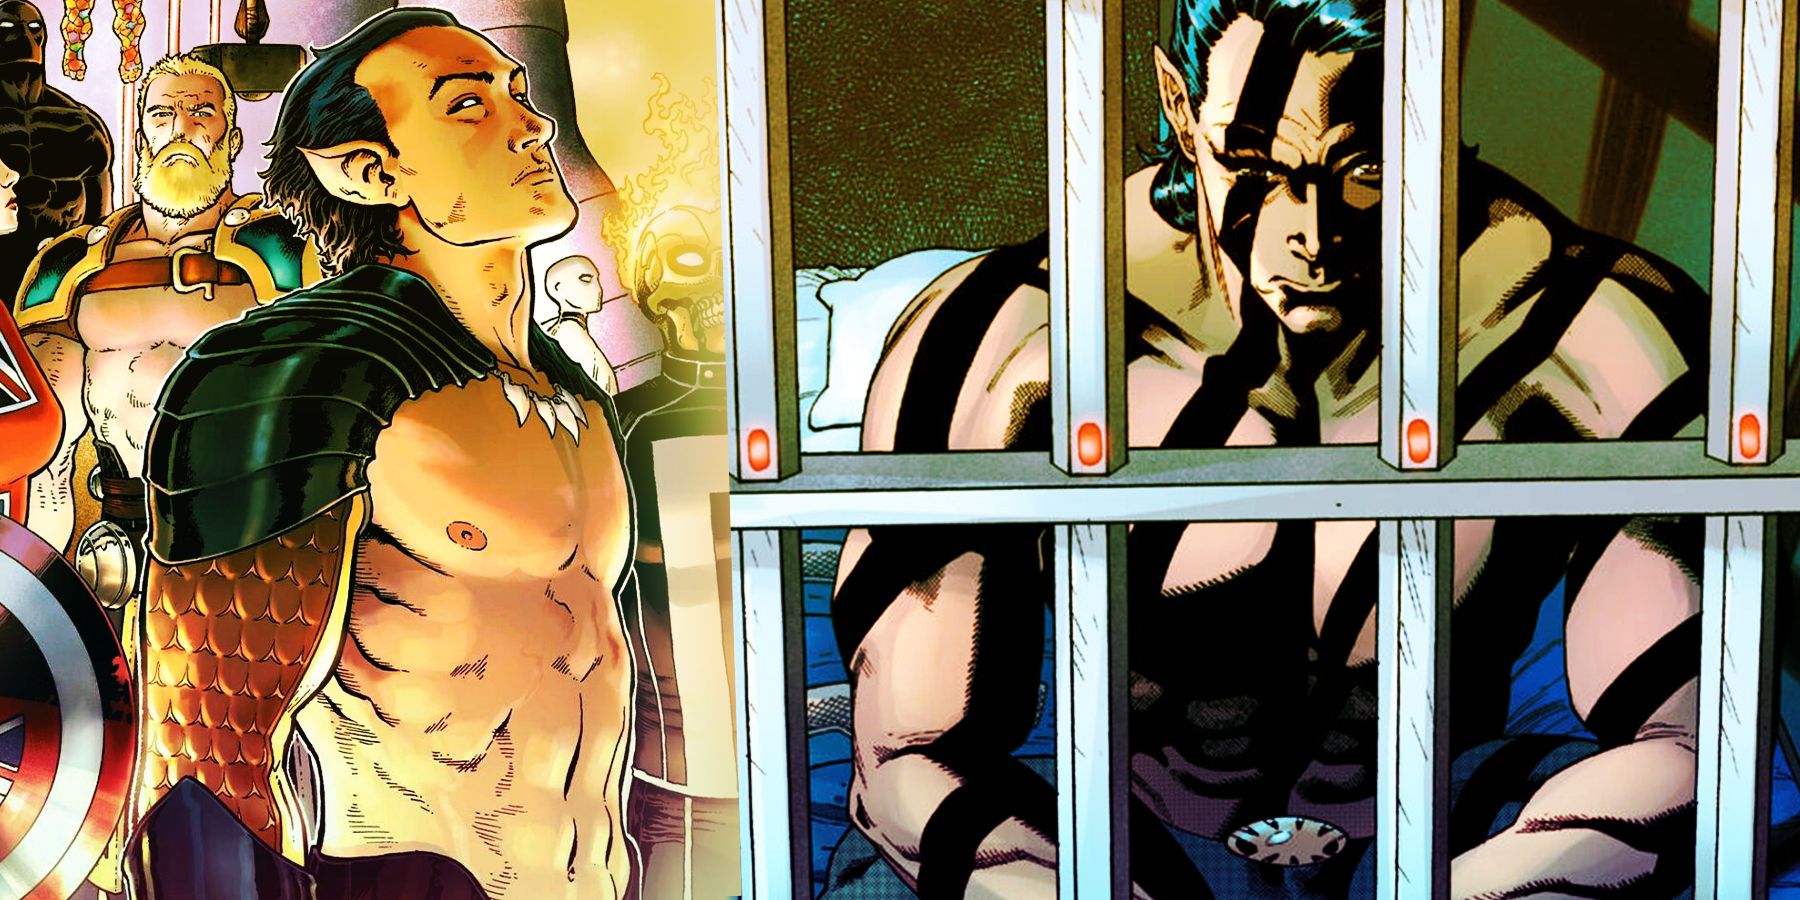 Namor standing and Namor behind bars in 'Avengers Assemble Omega'.